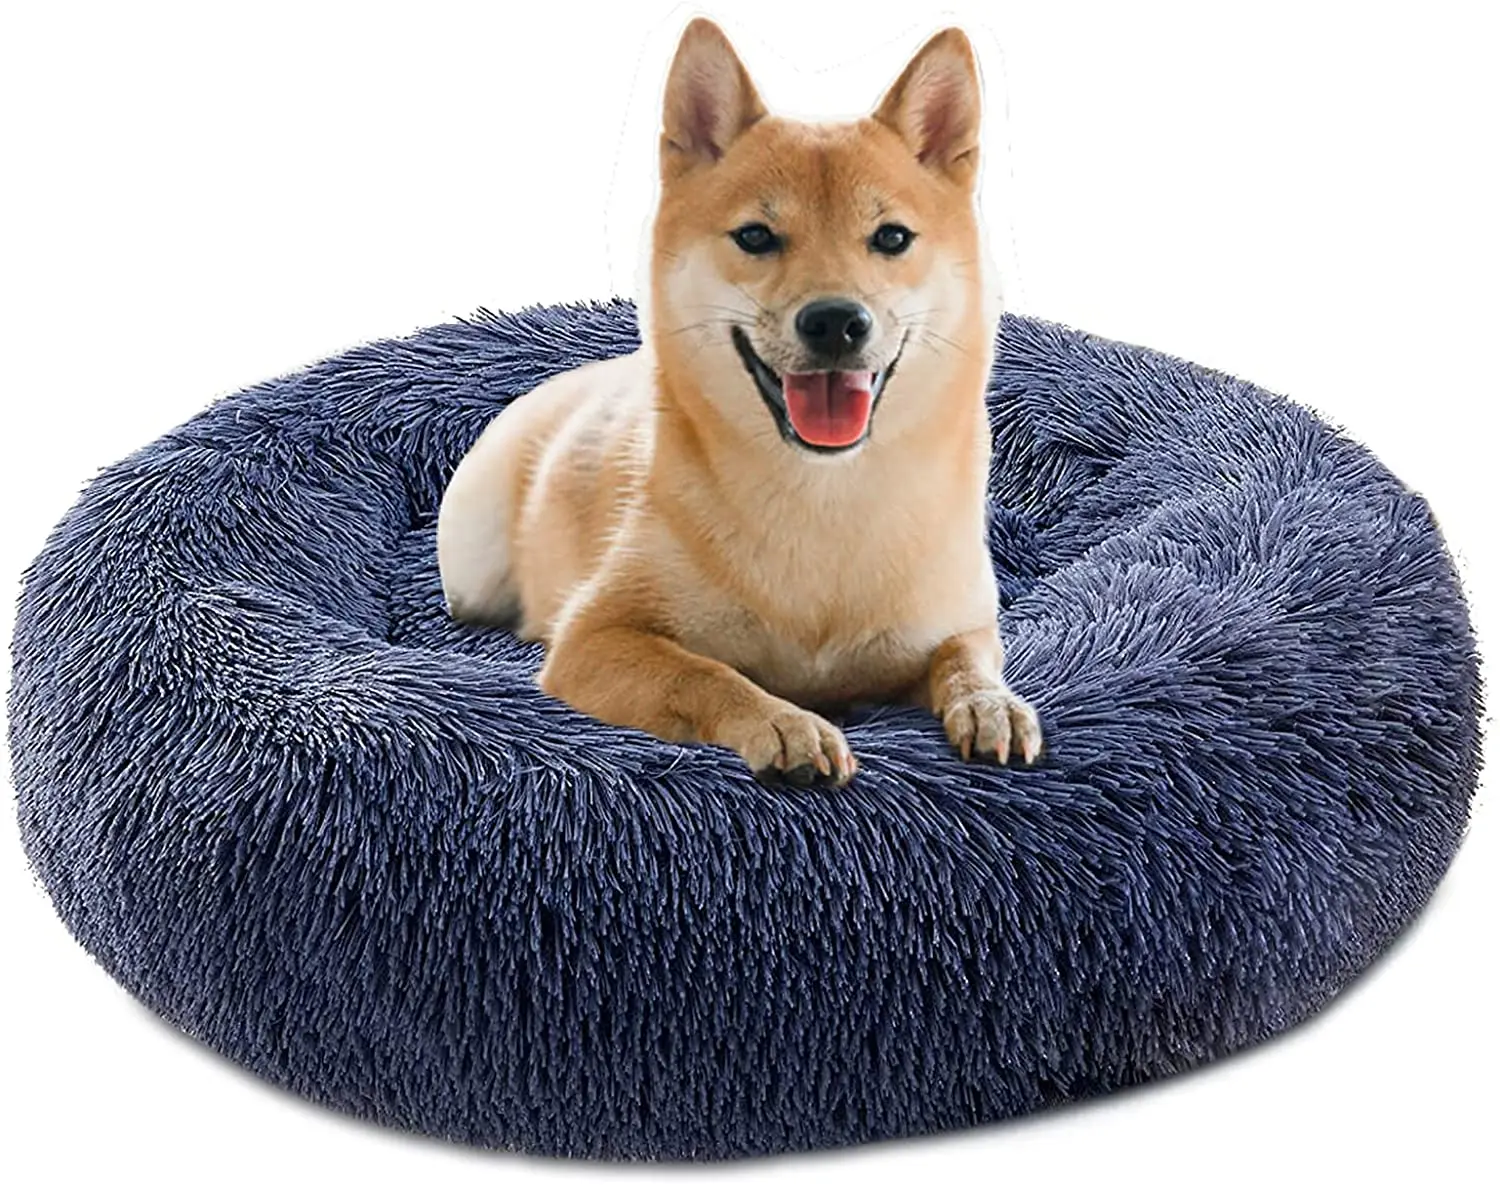 

Portable Fluffy Cotton Round Plush Warmth Non Slip Washable Luxury Large Plush Sleeping Memory Foam Dog Cat Sofa Bed Pet Beds, Multi colors